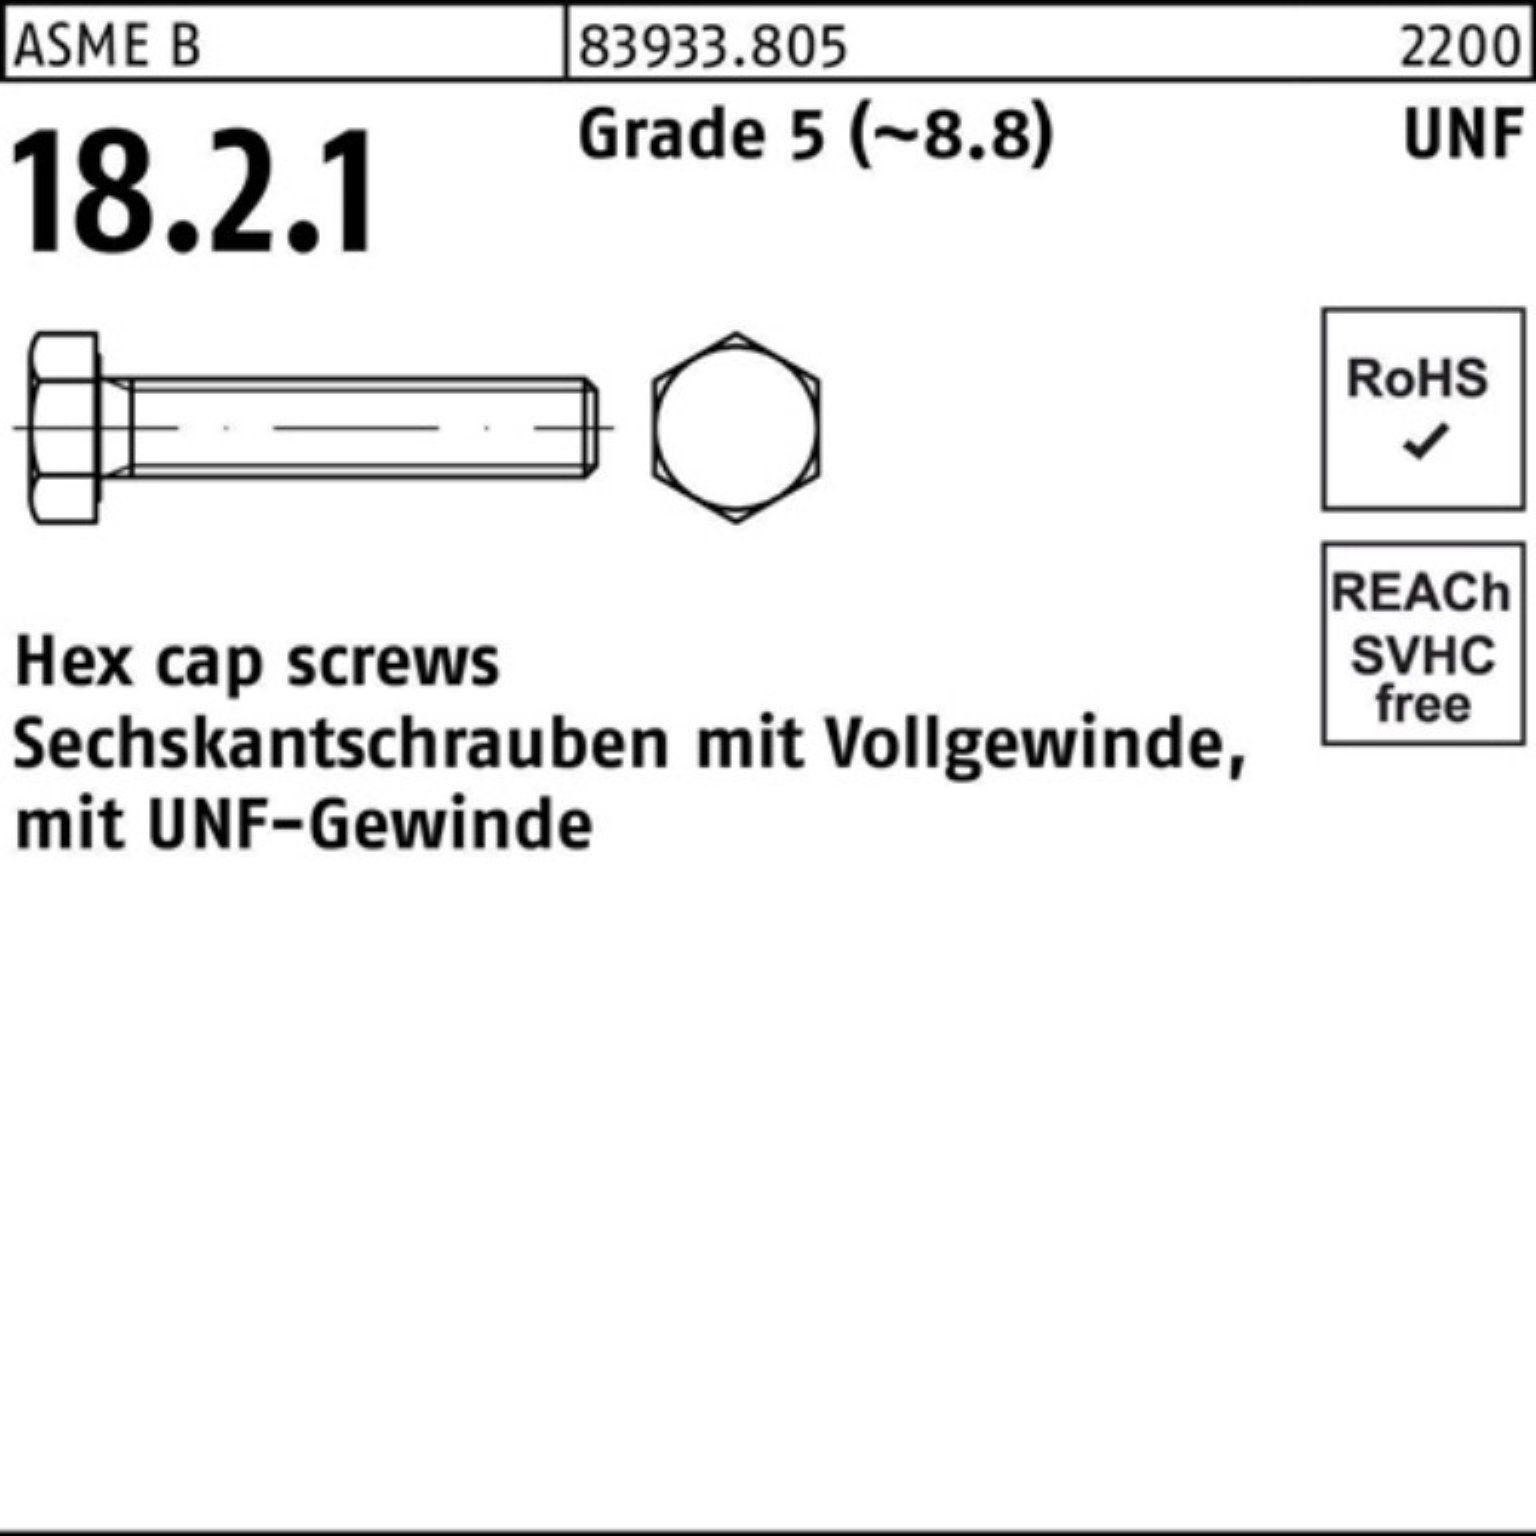 Reyher Sechskantschraube 100er Pack Sechskantschraube R 83933 UNF-Gewinde VG 7/16x 1 Grade 5